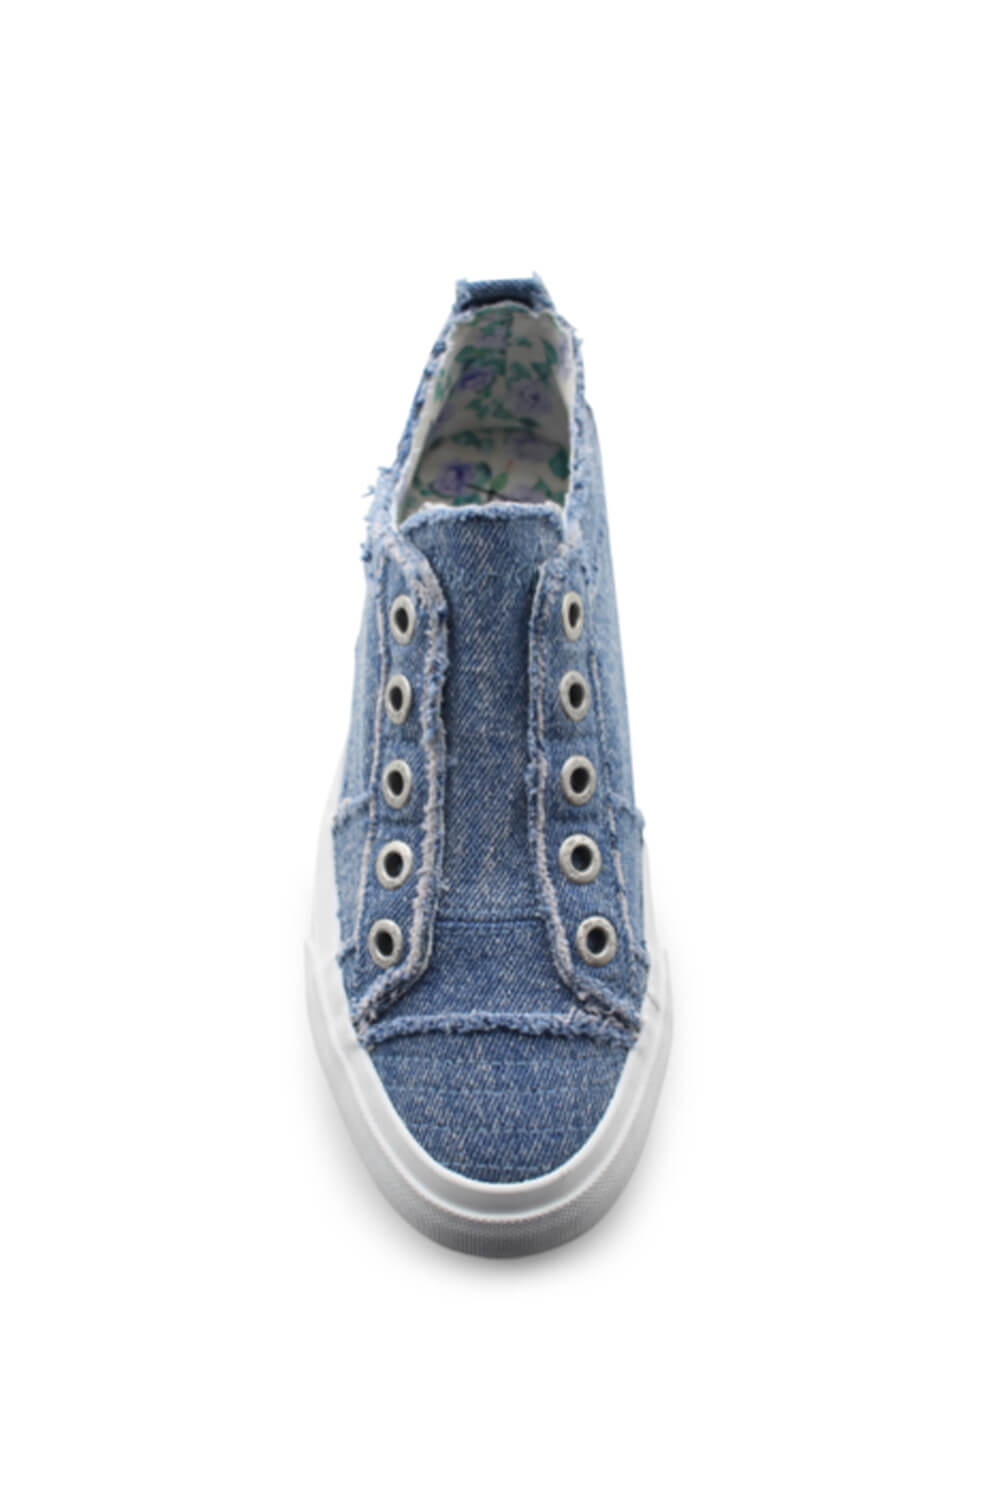 Blowfish Shoes- Blue Denim – The Silver Strawberry